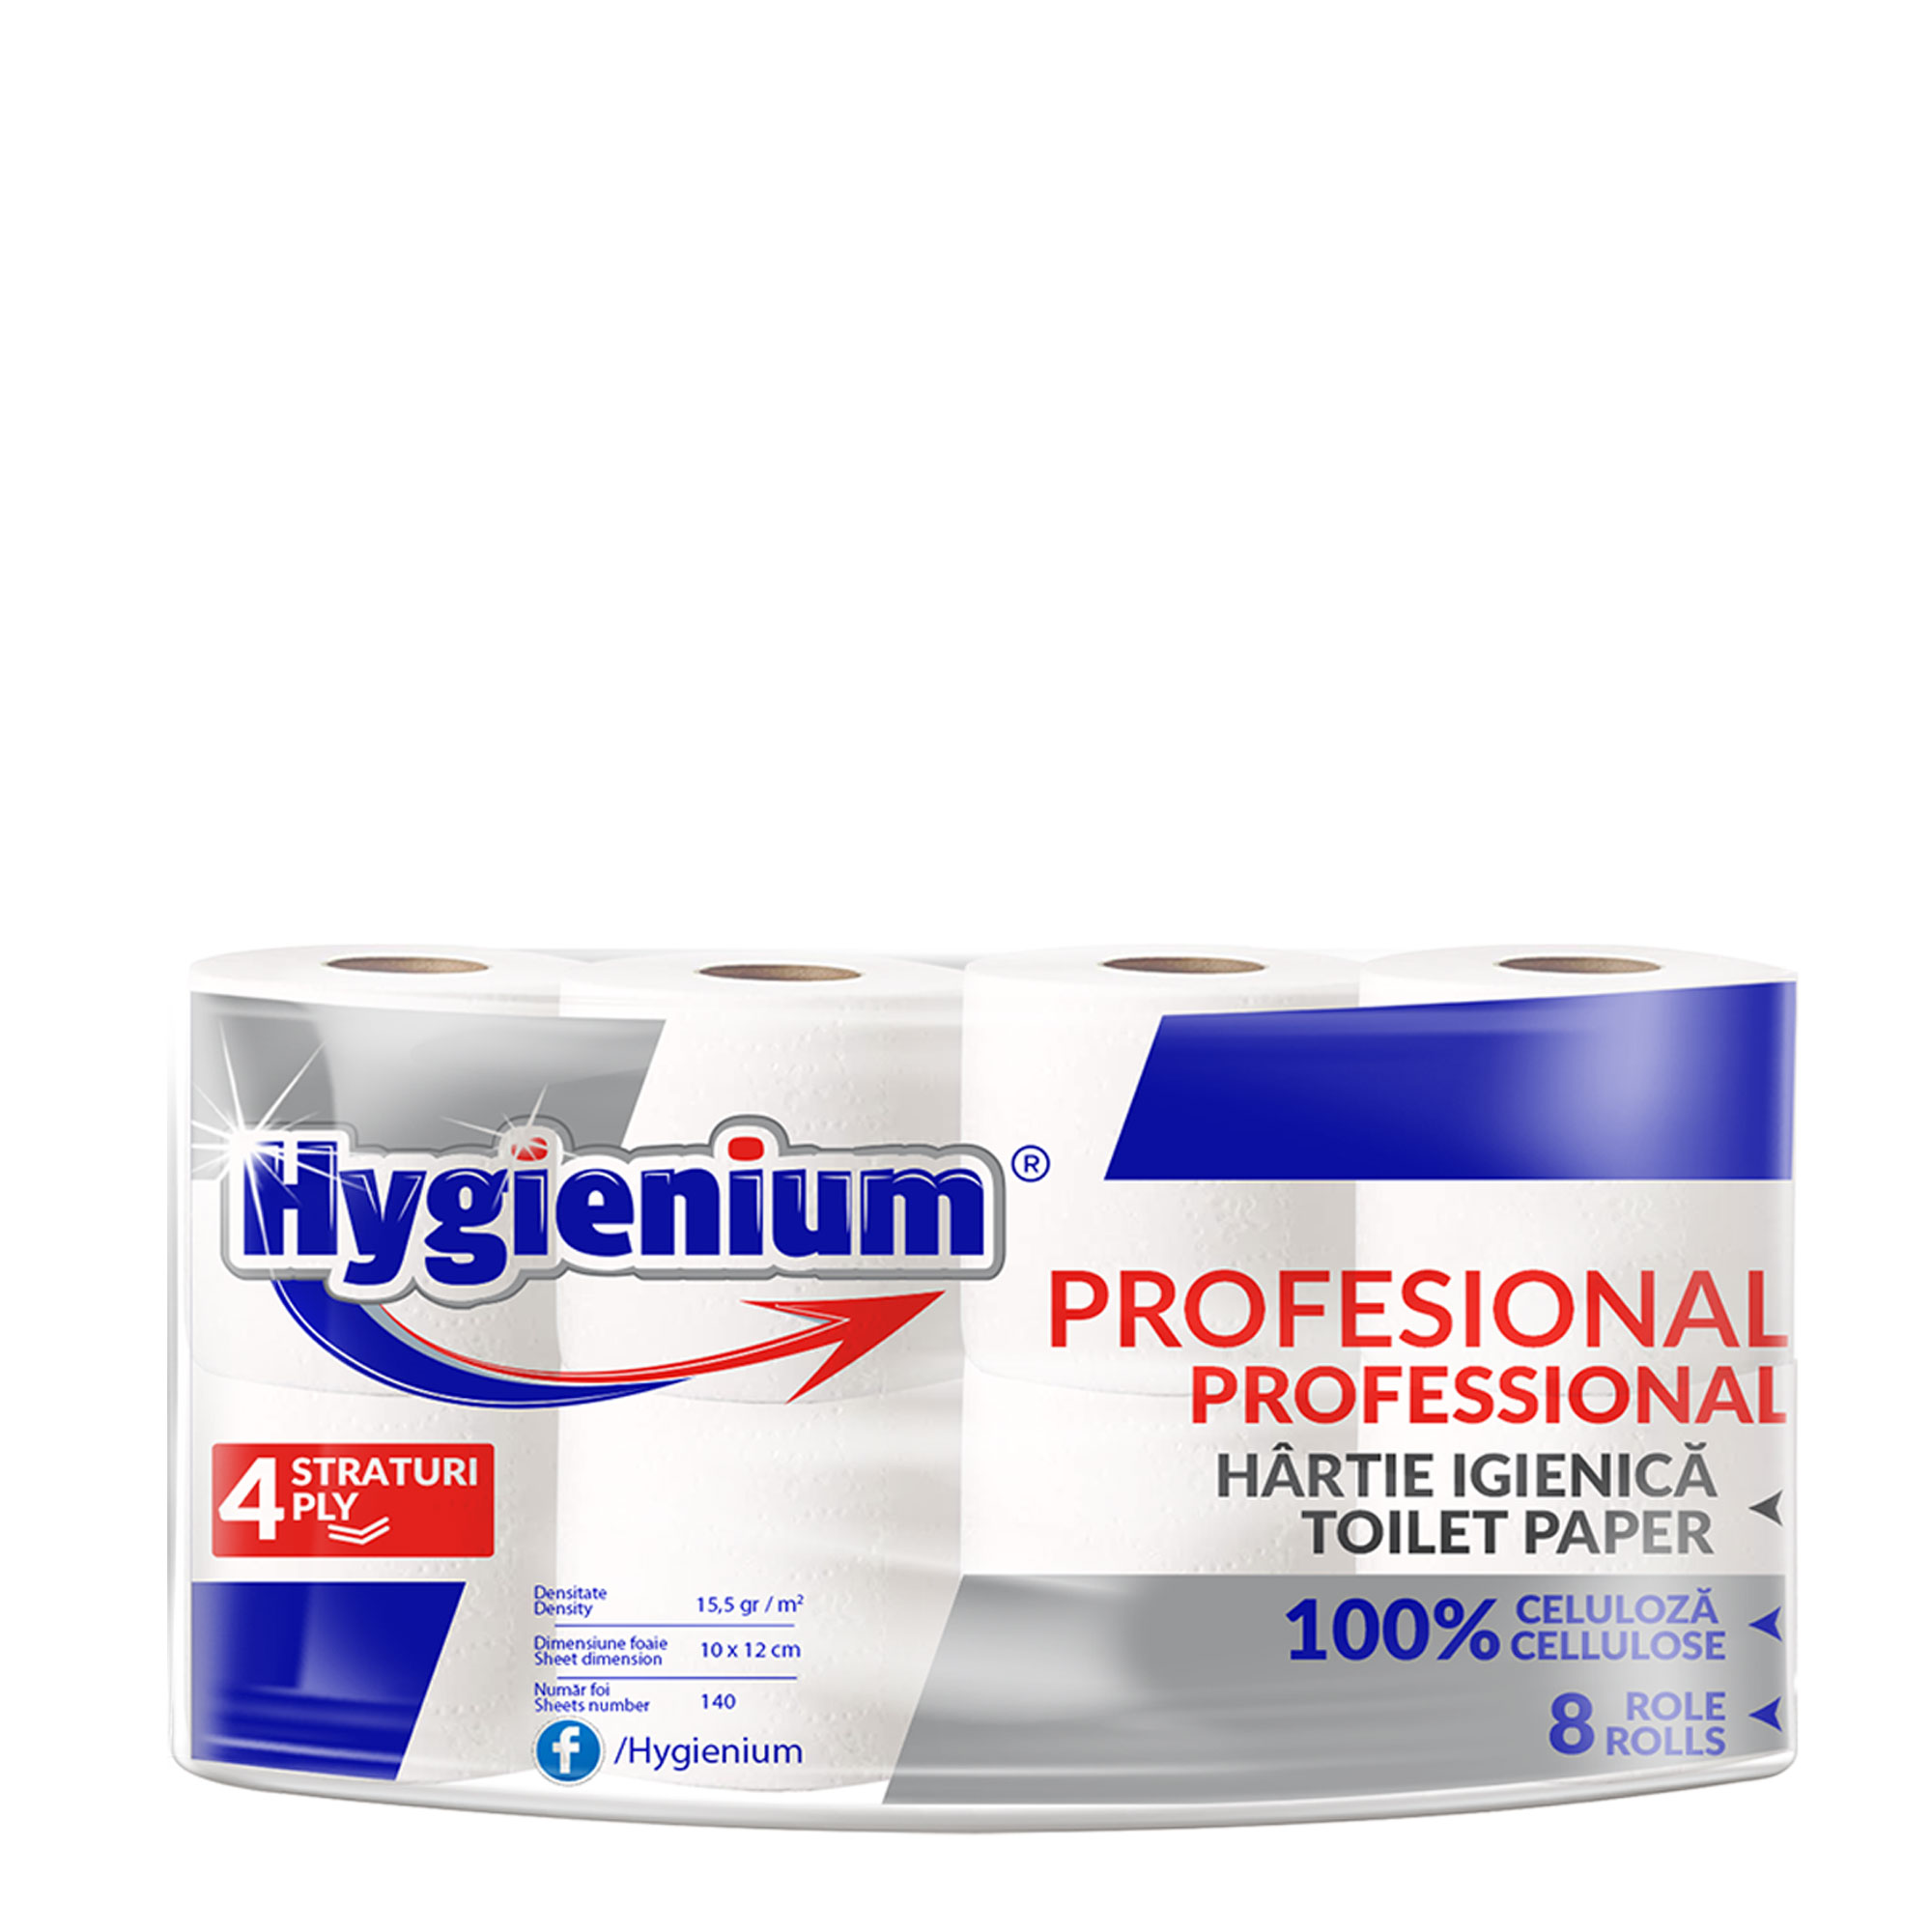 Hygienium Professional Hartie Igienica 8 rolls 